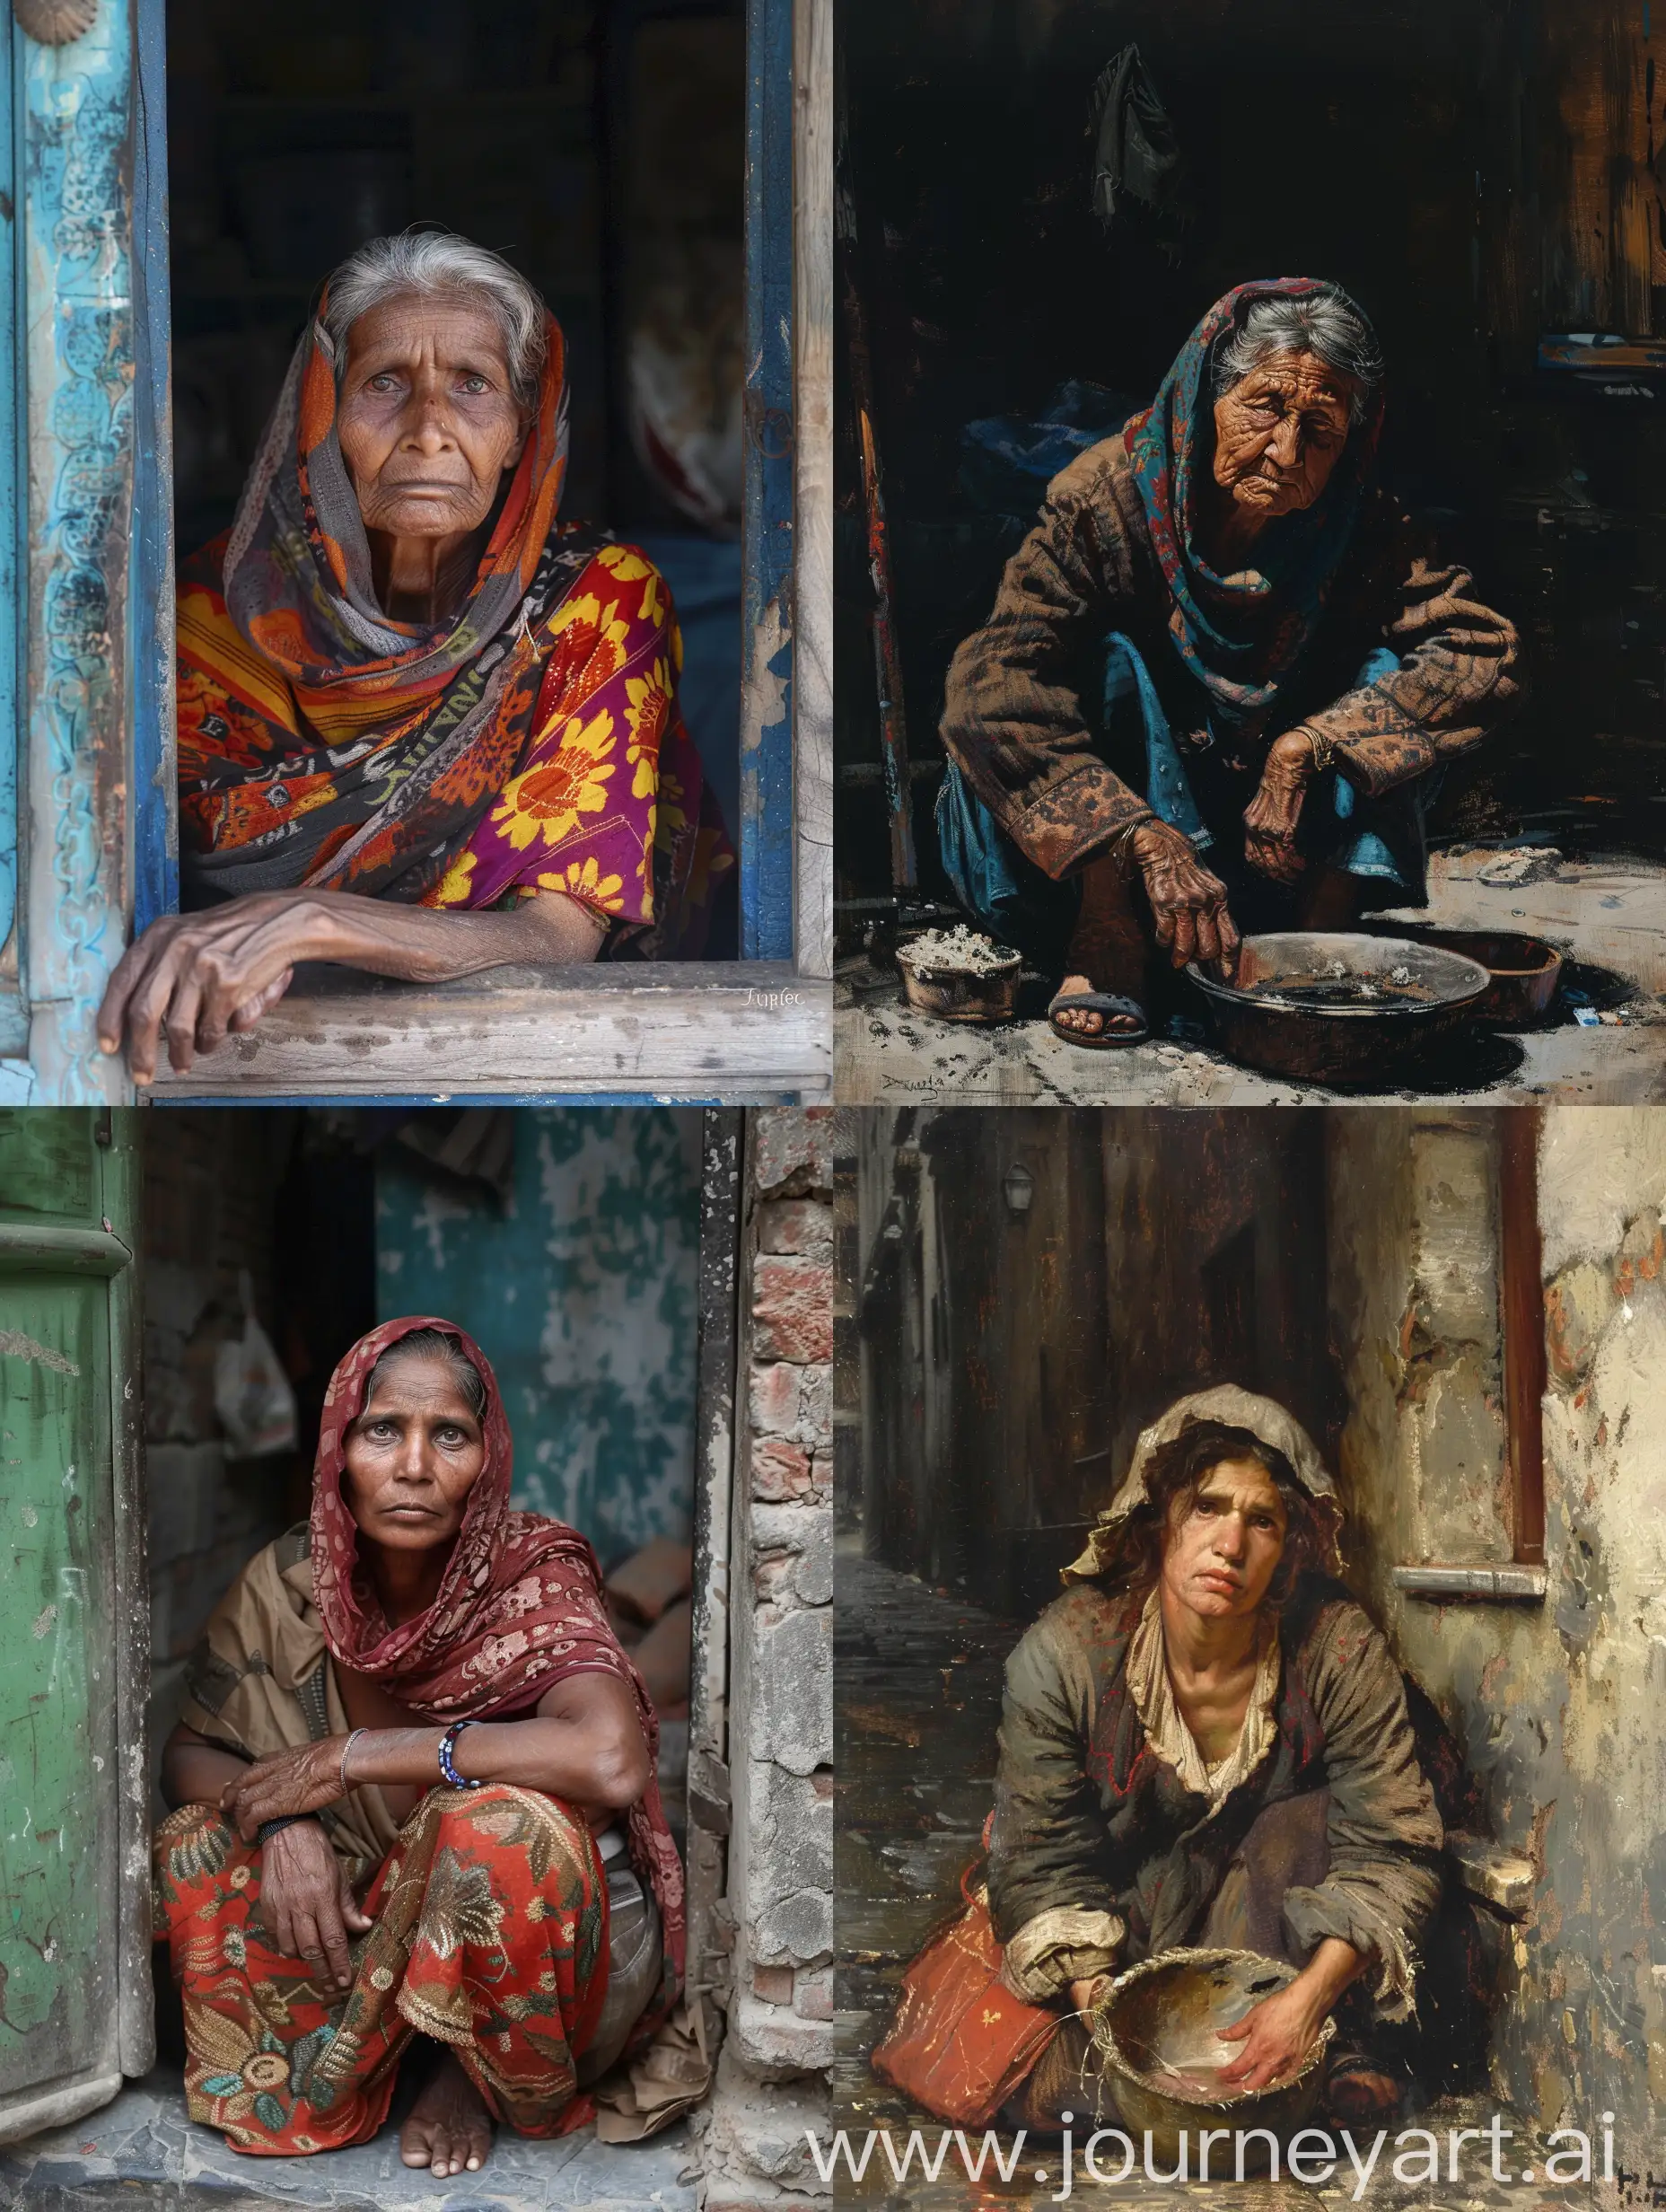 Struggling-Woman-in-Poverty-Portrait-of-Adversity